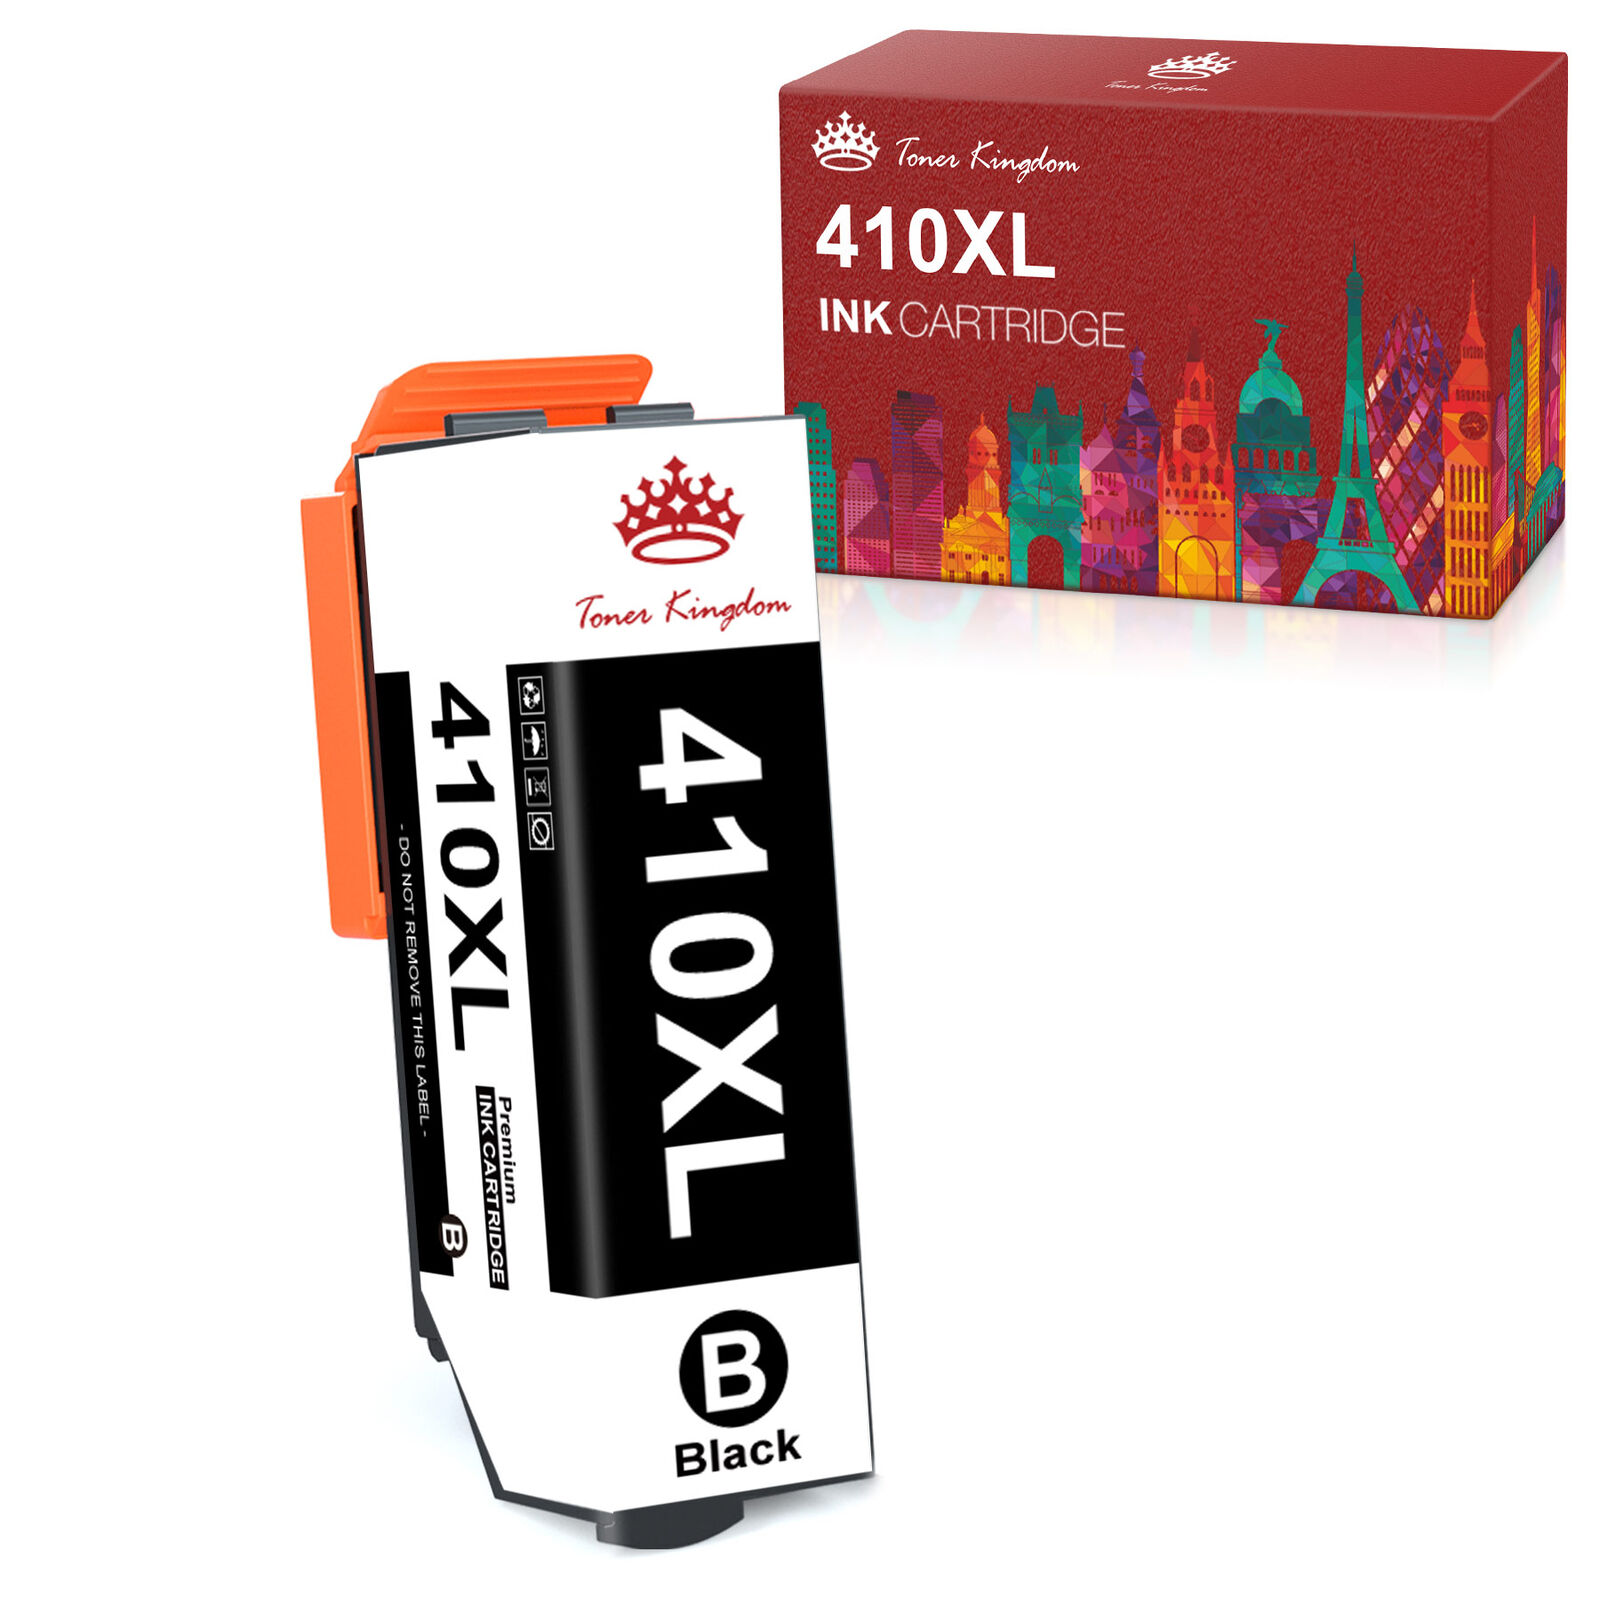 410 XL T410XL Ink Cartridges for Epson Expression XP-635 XP-640 XP-830 XP-7100